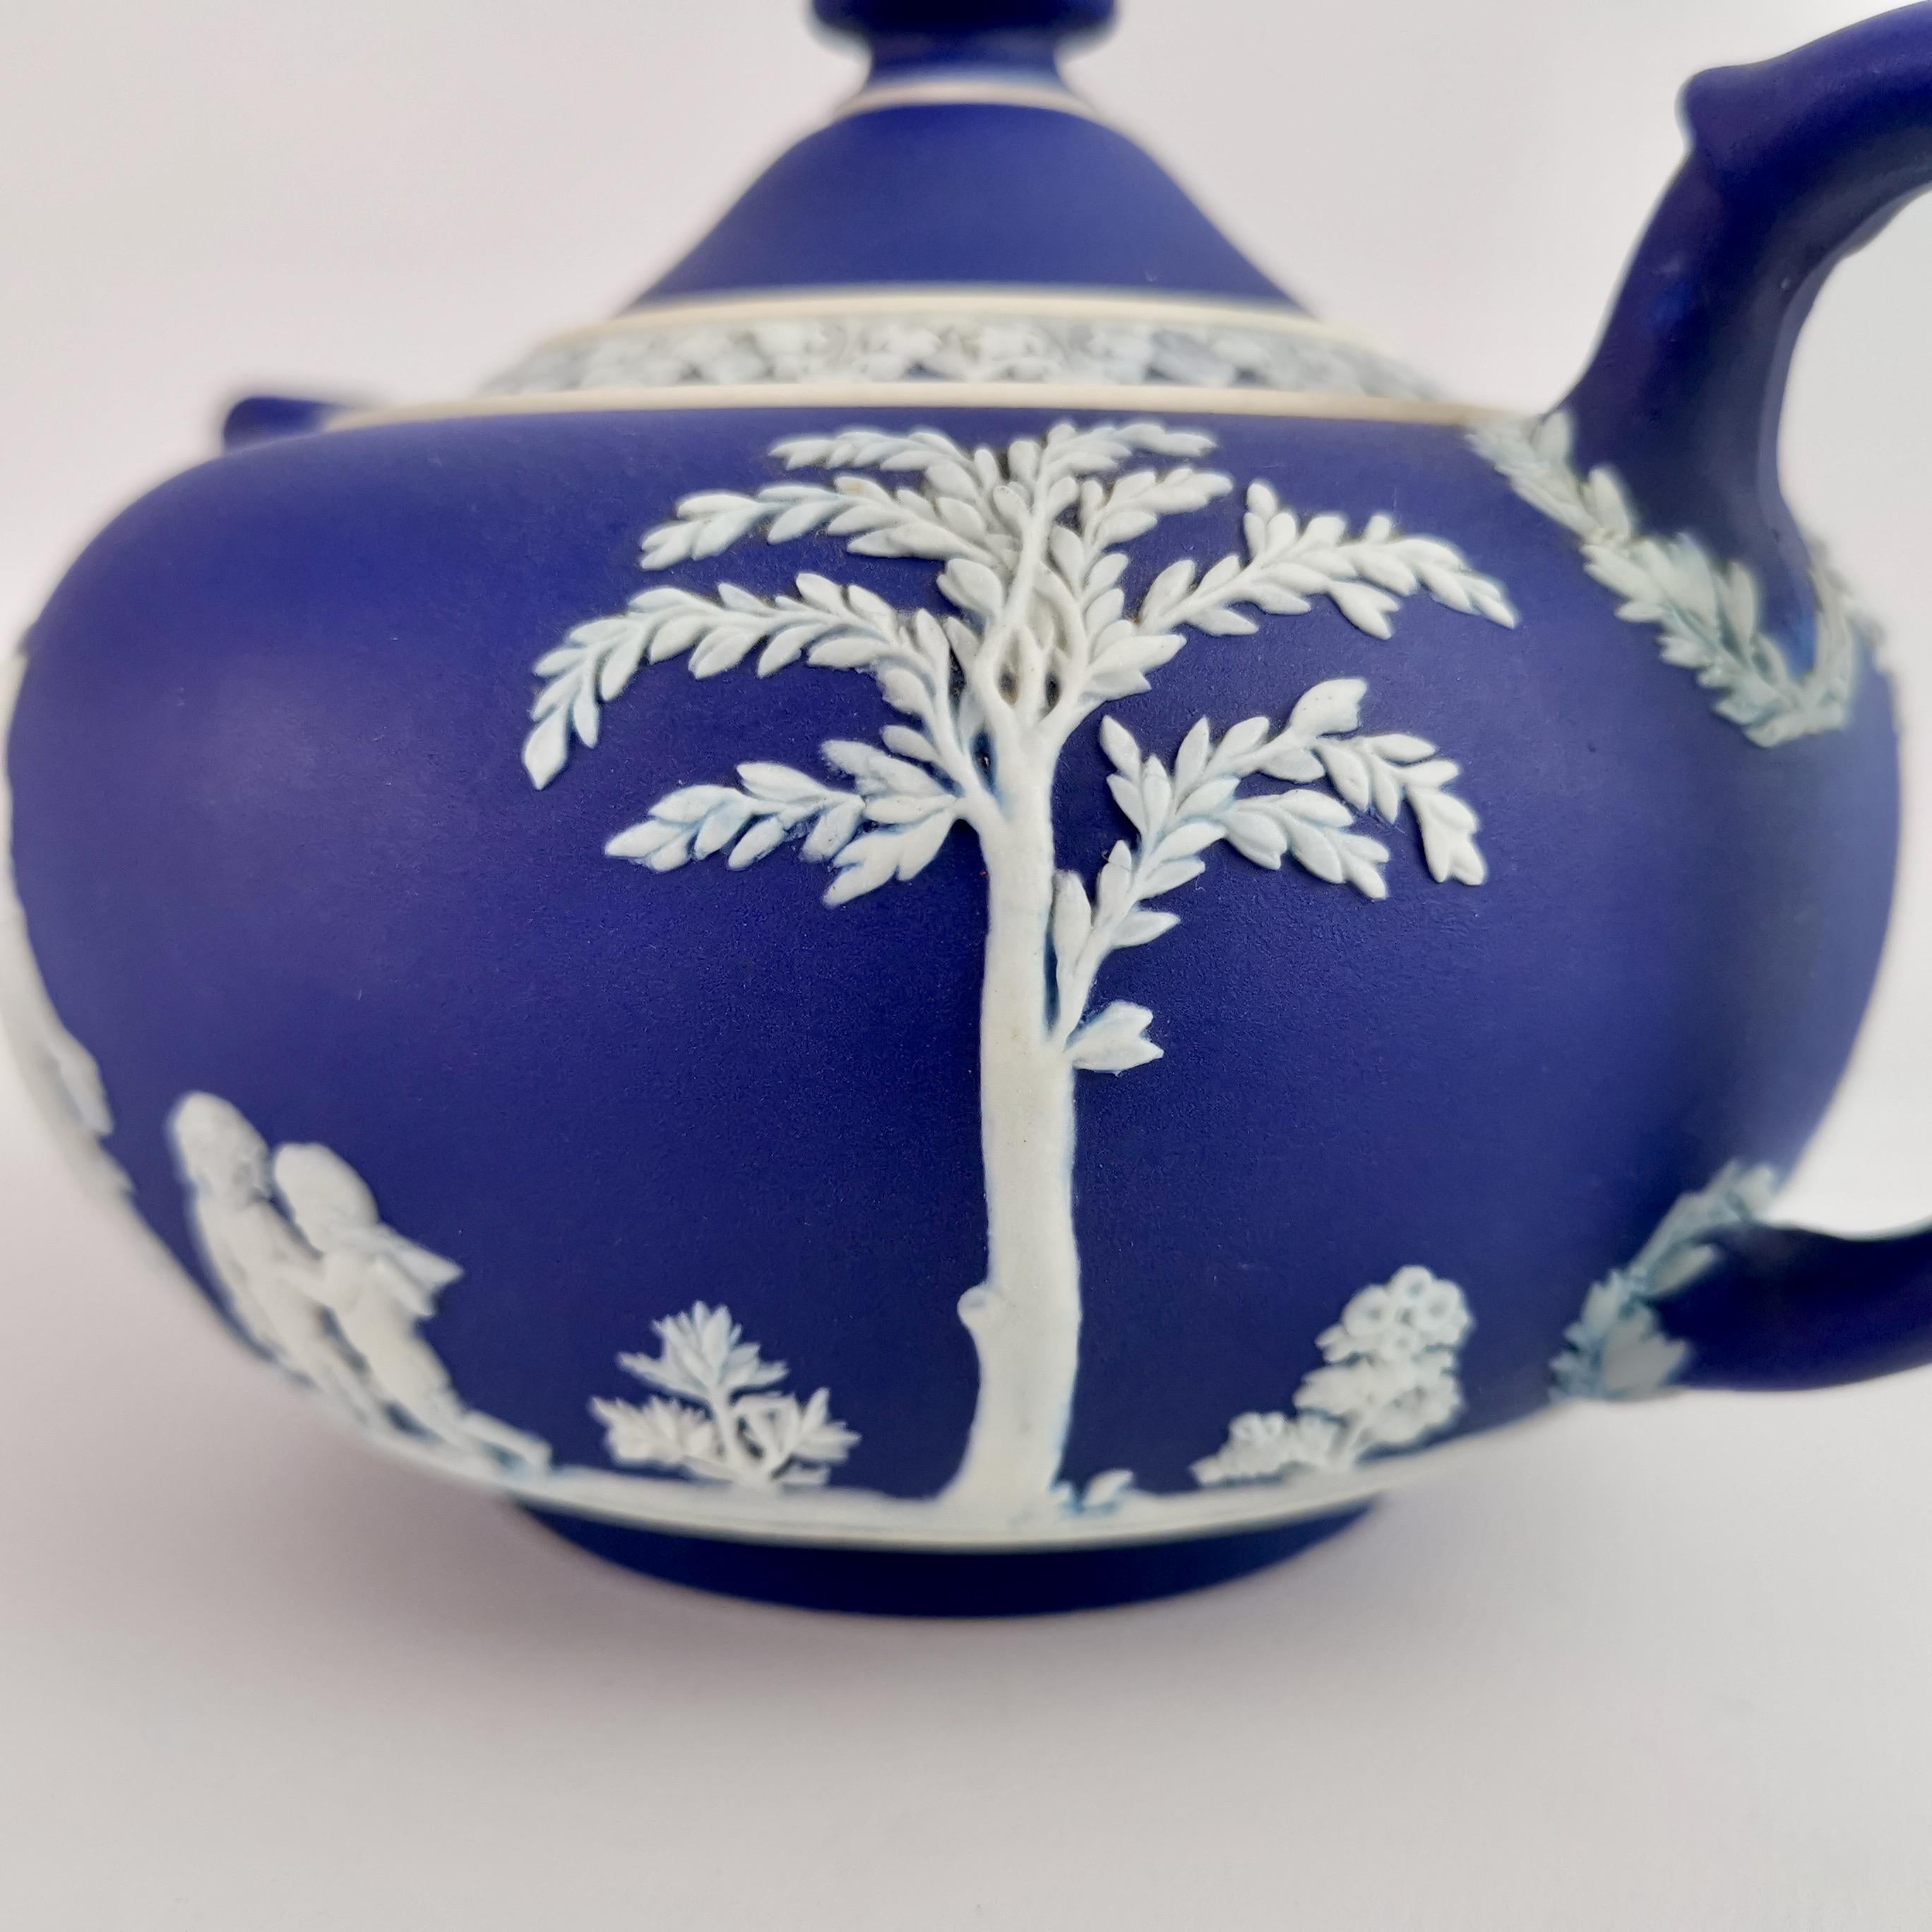 Early 20th Century Wedgwood Dark Blue Neoclassical Jasperware Porcelain Teapot, 1 Pint, 1921